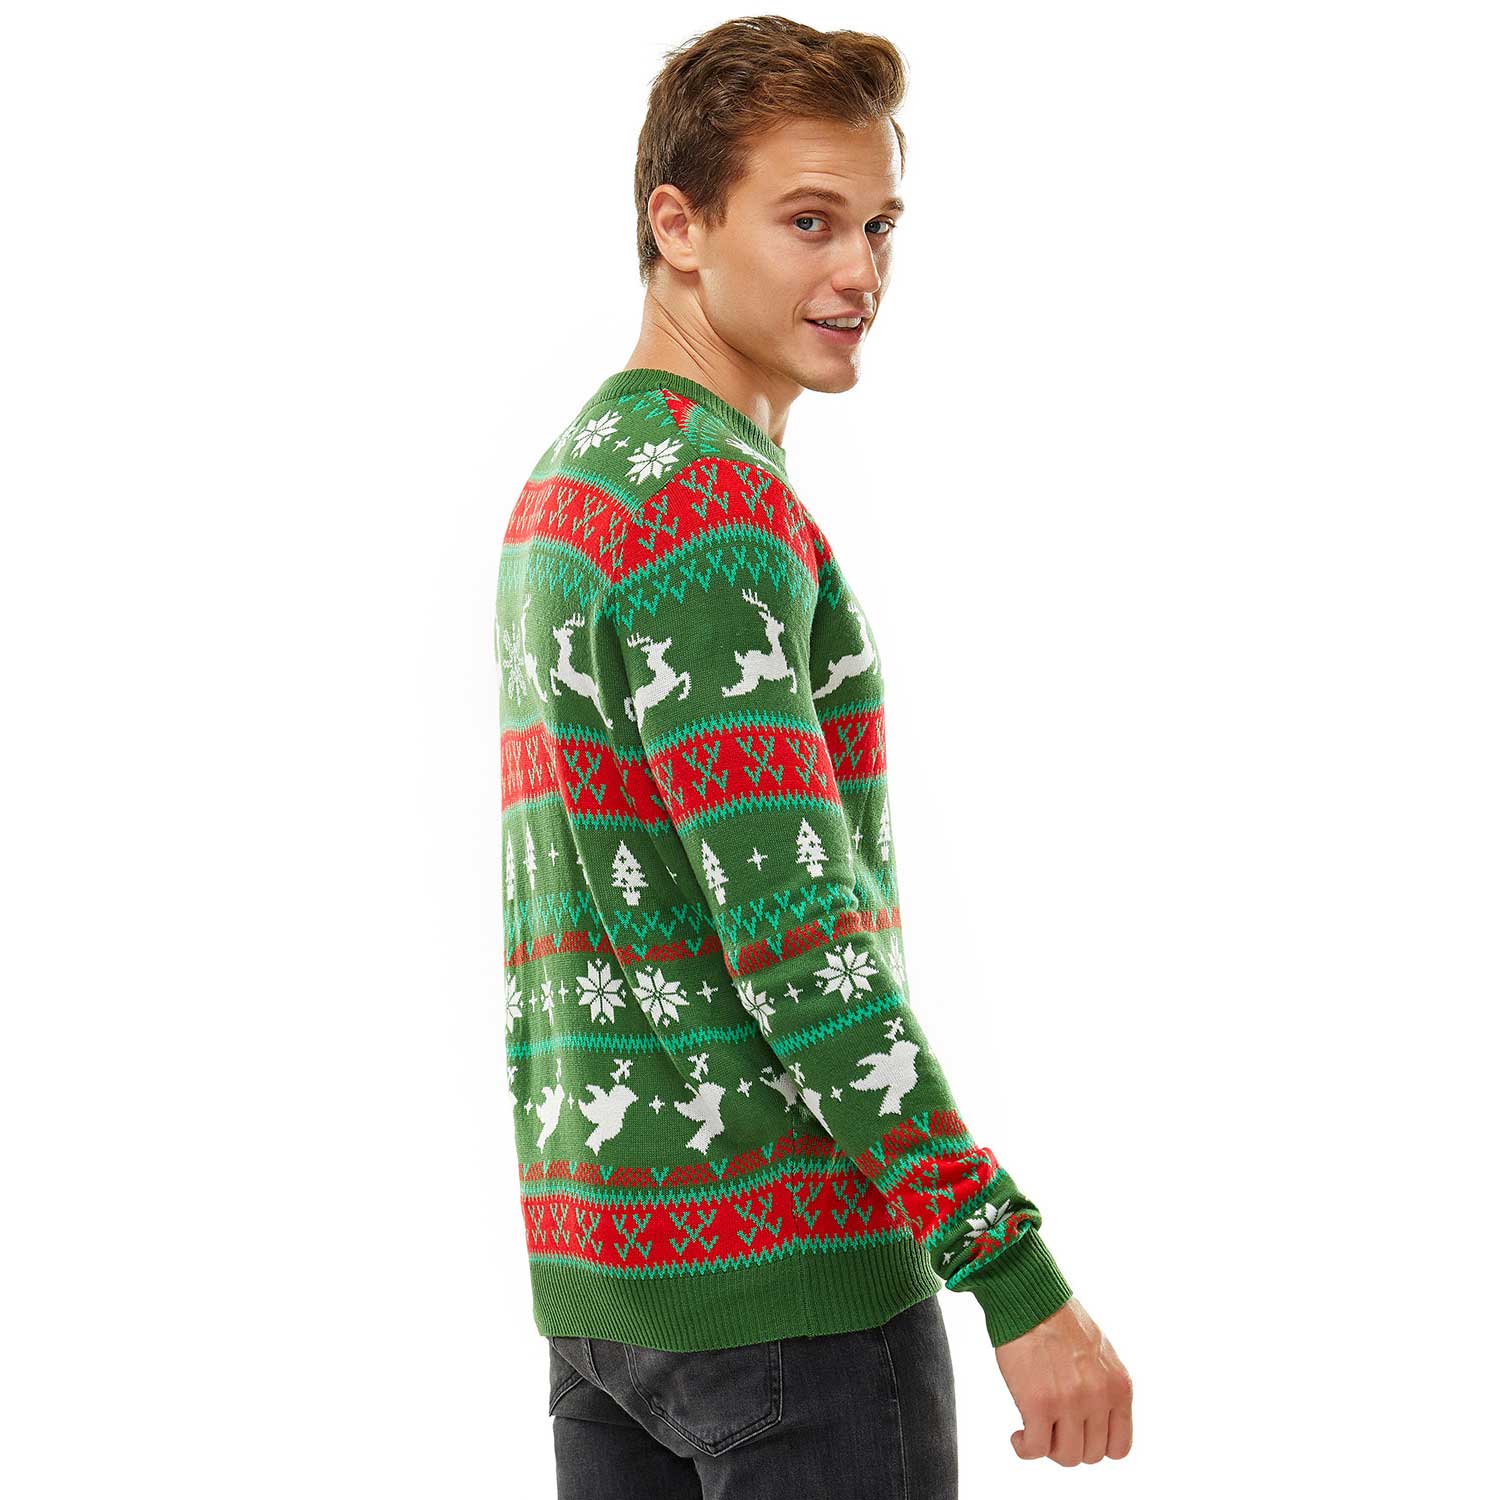 Festive Fair Isle Mens Funny Christmas Holiday Sweater